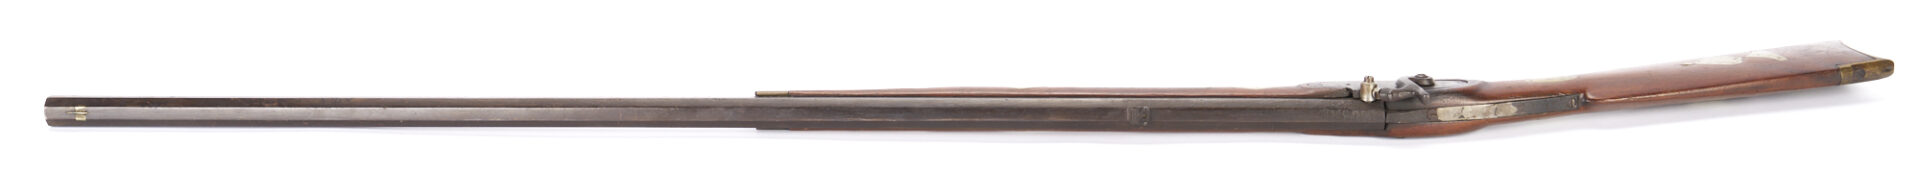 Lot 523: Half Stock Percussion Long Rifle, Marked "W Lamb & Son", North Carolina; Walter Cline Collection